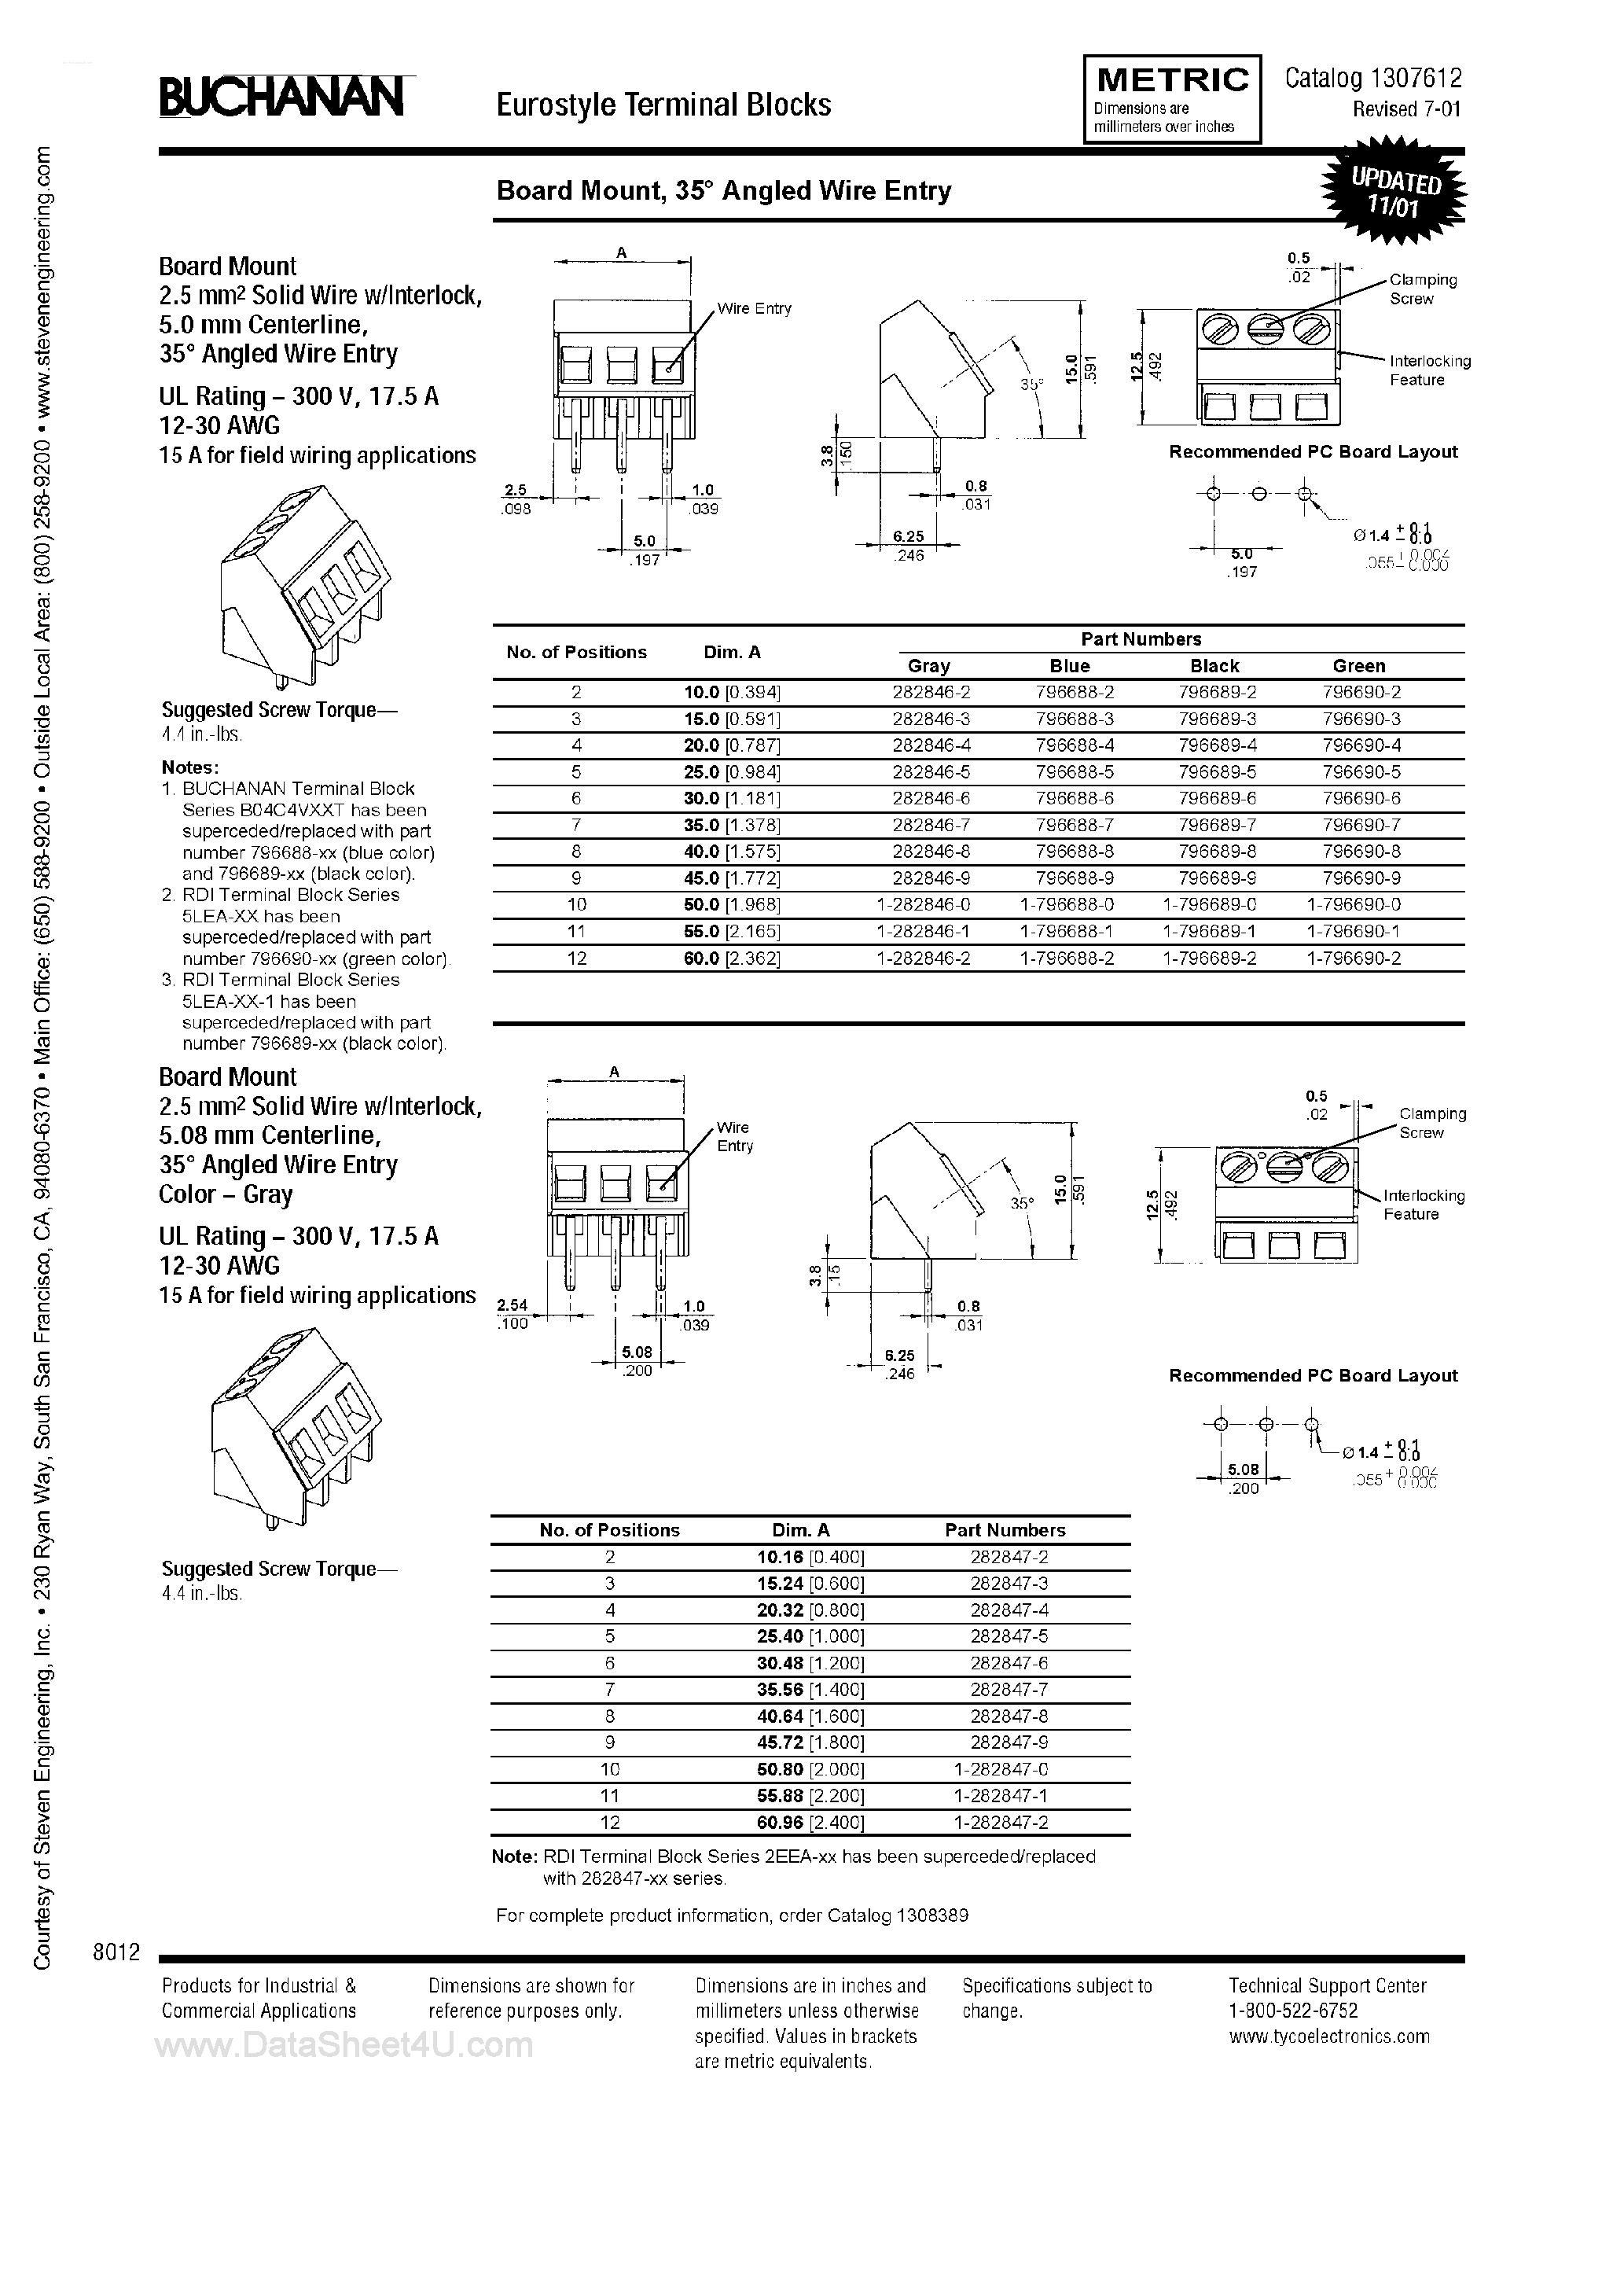 Datasheet 1-796688-x - Eurostyle Terminal Blocks page 1